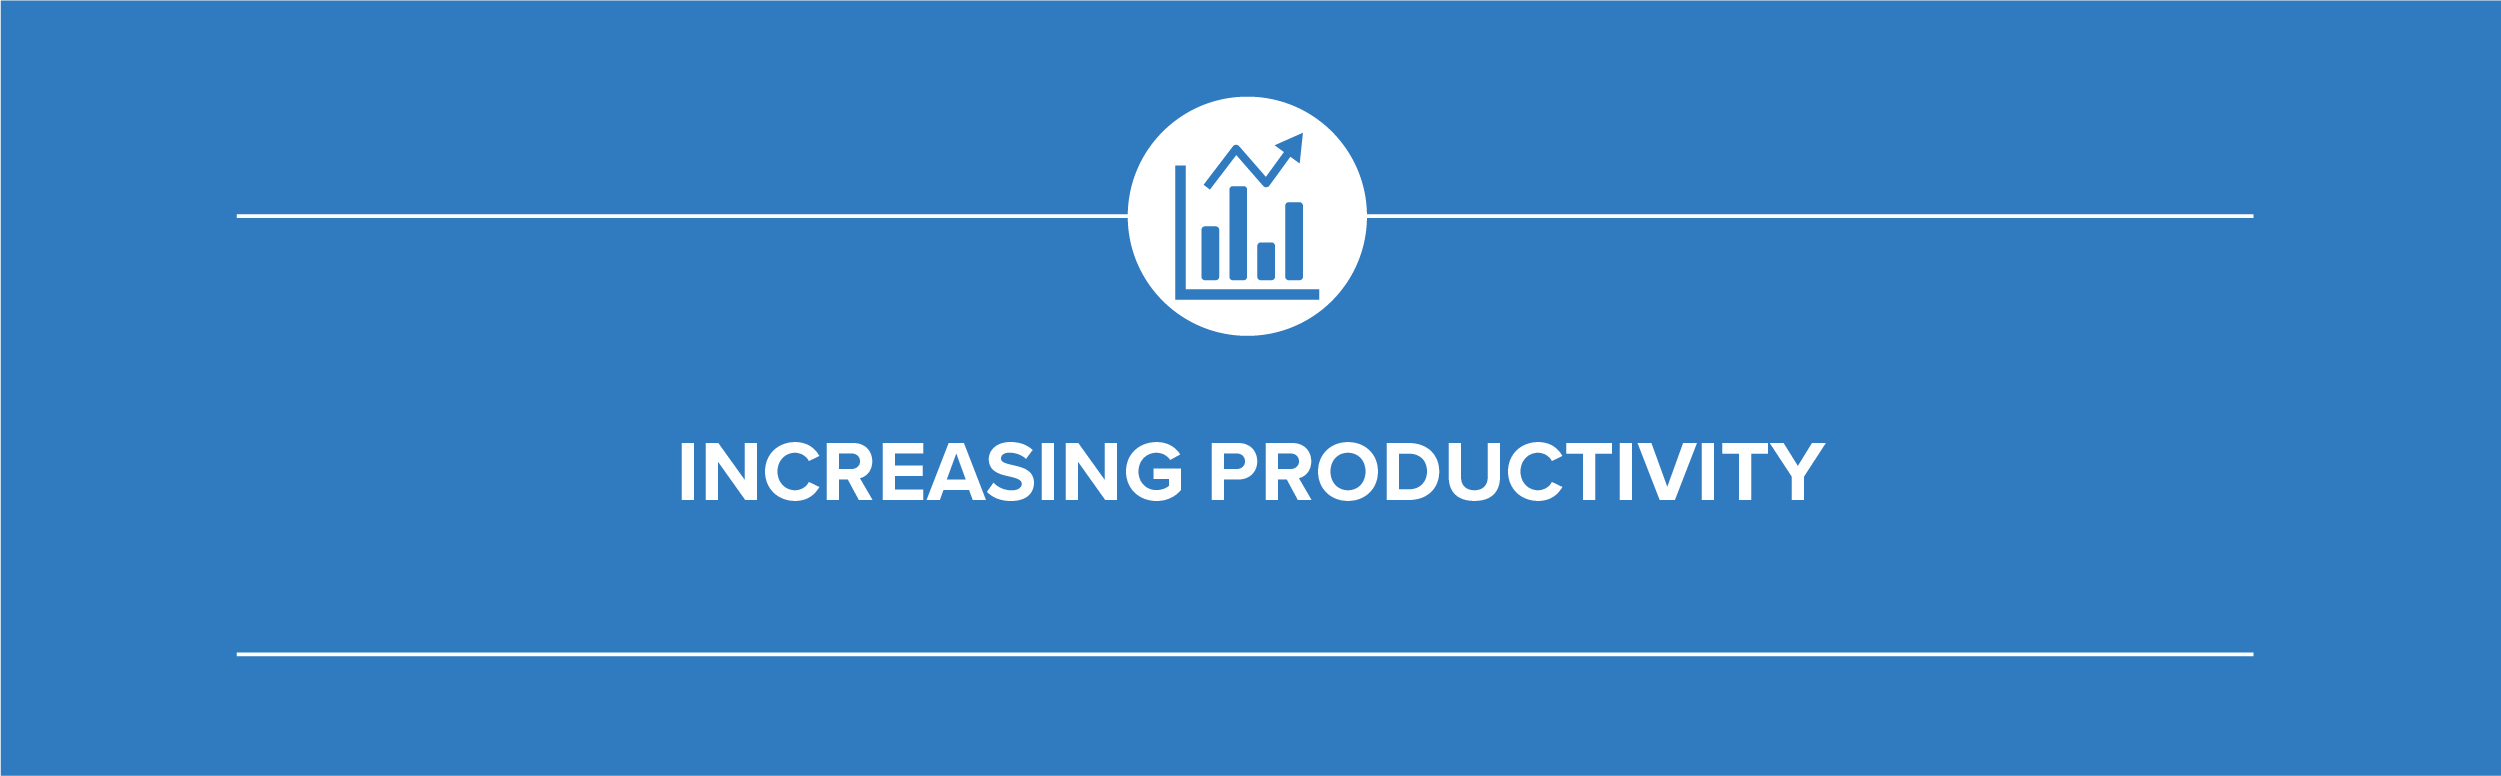 Blog_Increasing_Productivity